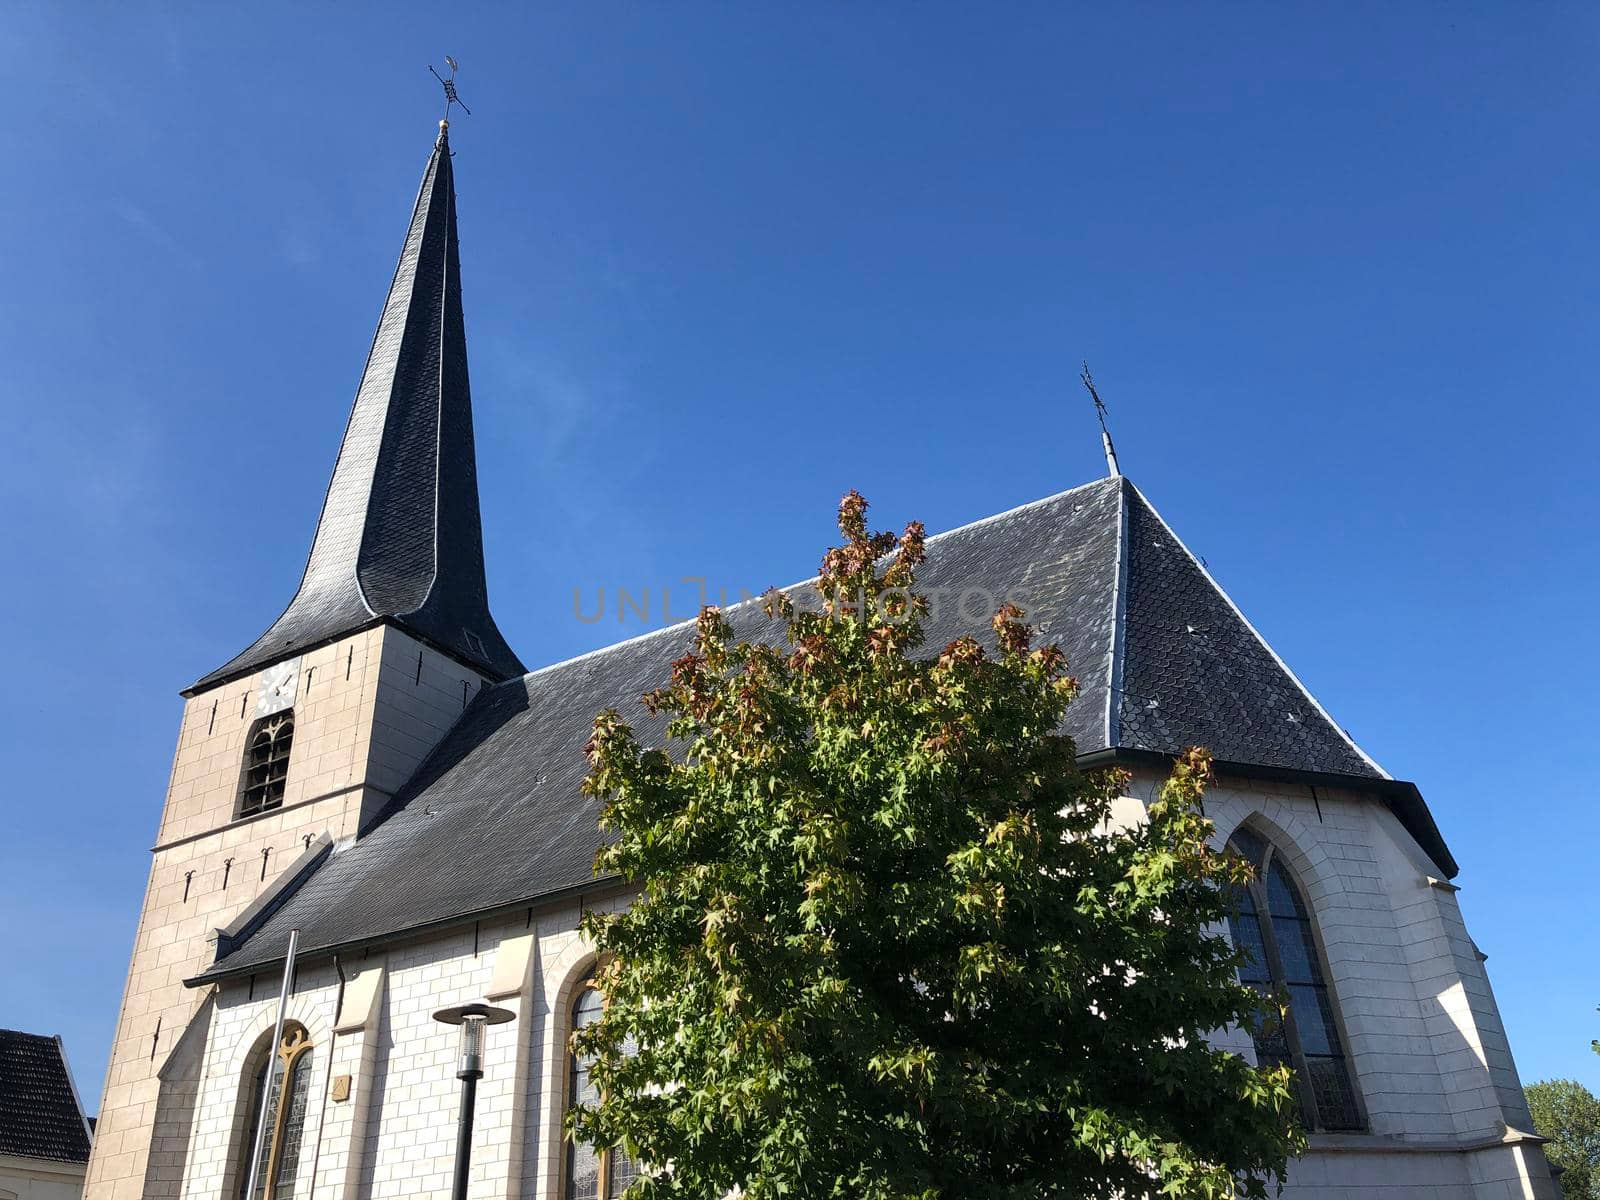 Johannes church in Lichtenvoorde, The Netherlands